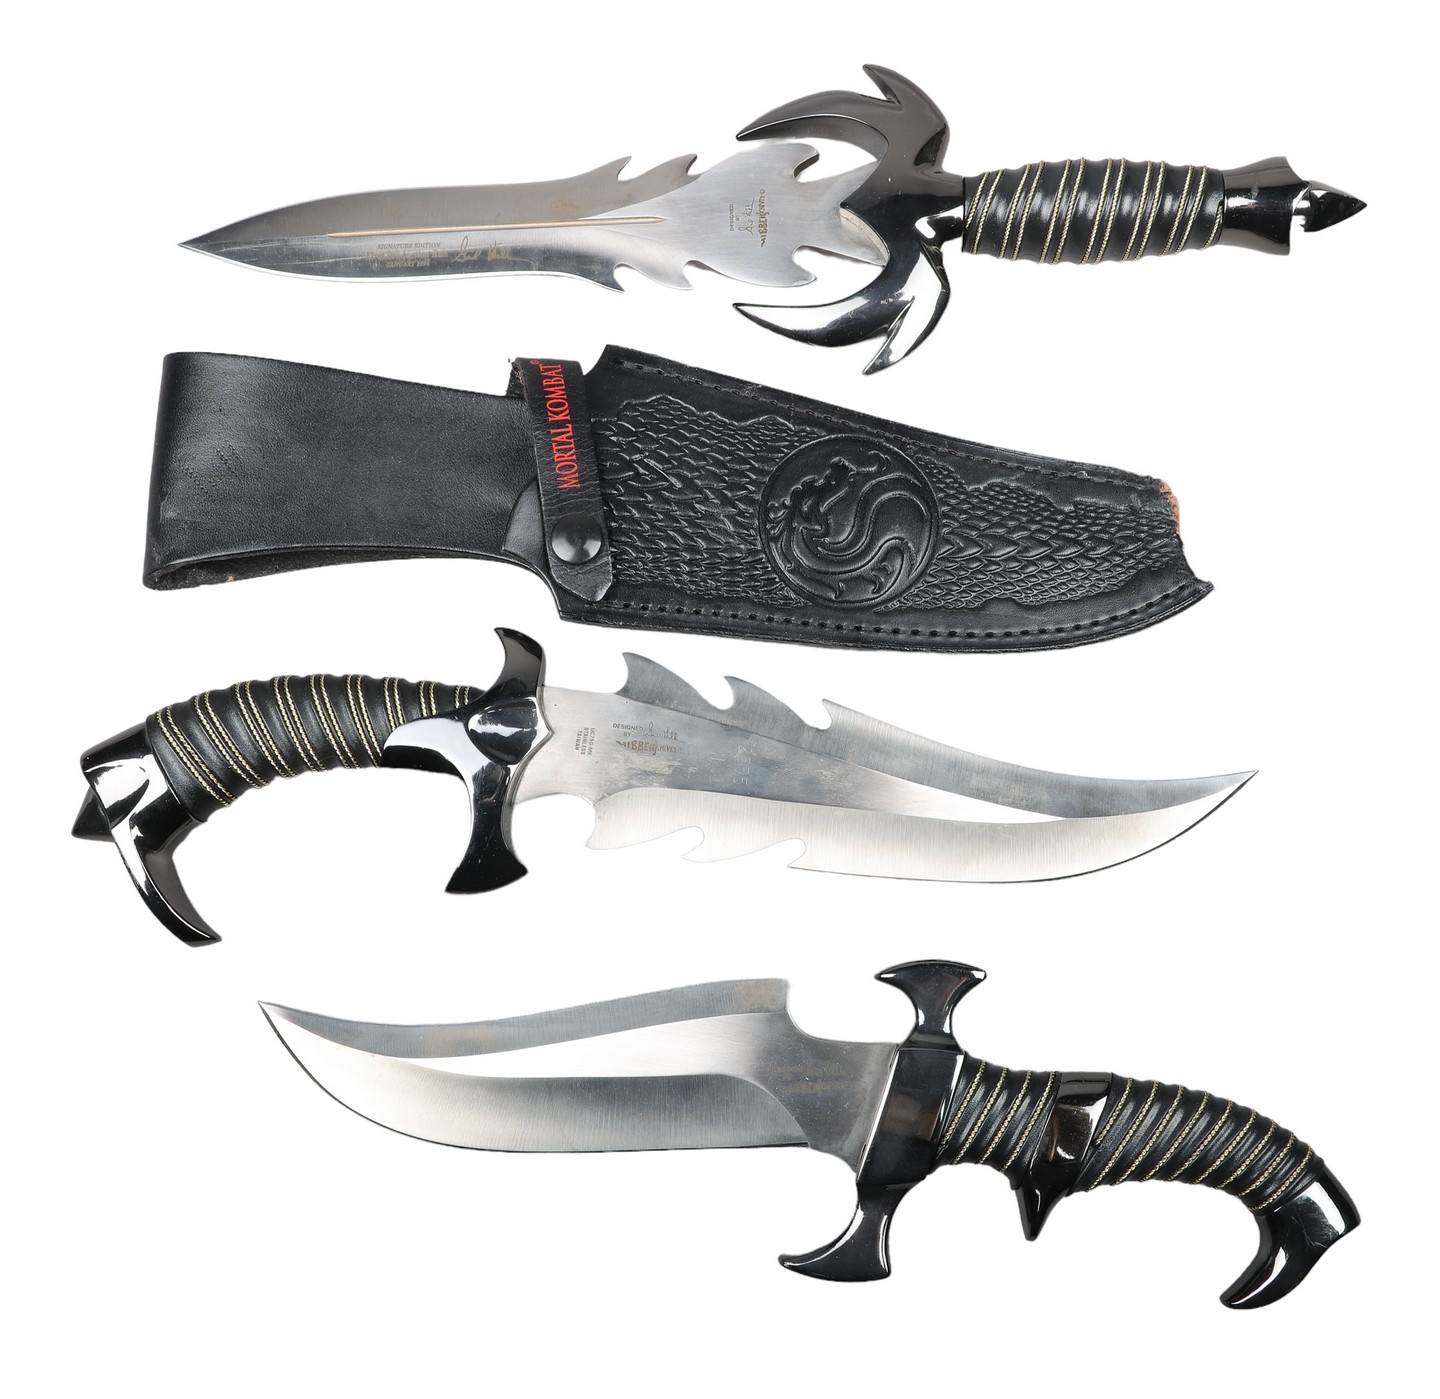 (3) Gil Hibben fantasy knives,